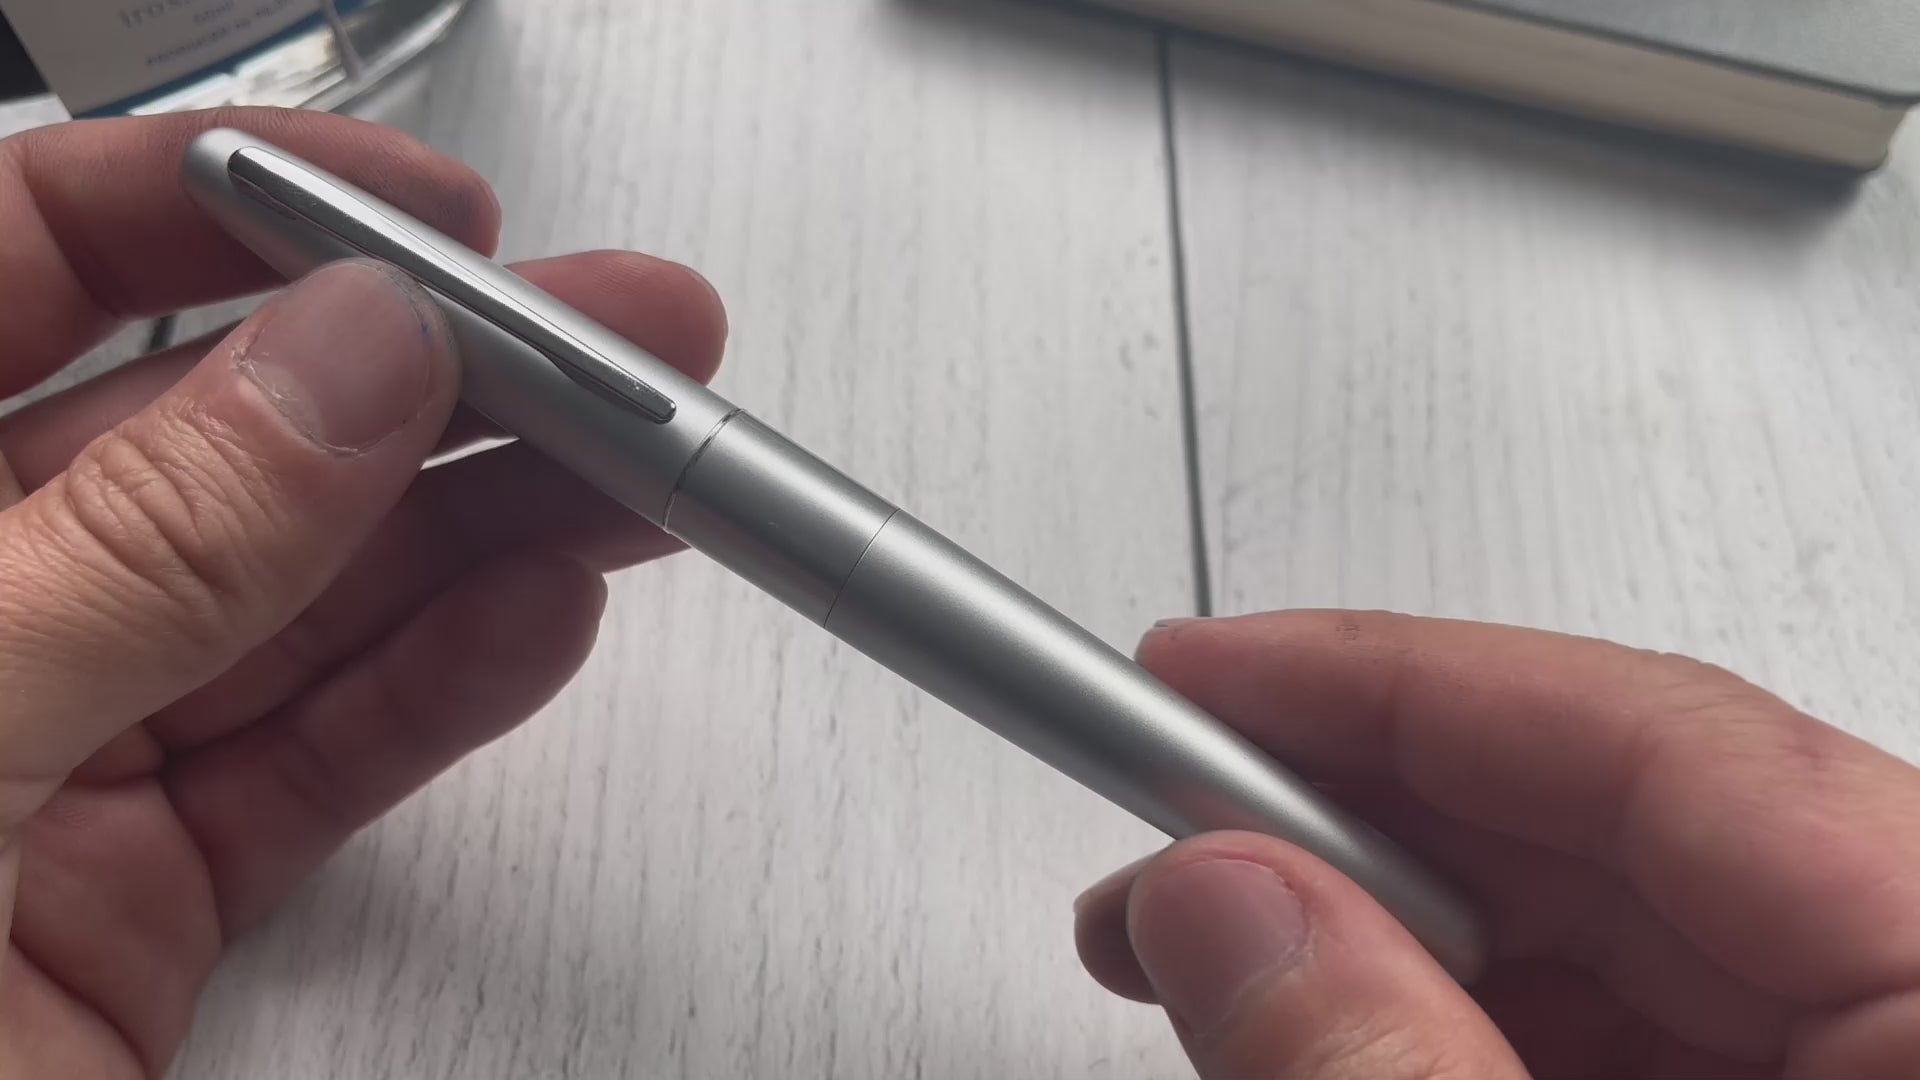 Pilot White Tiger Fountain Pen – Ink+Volt